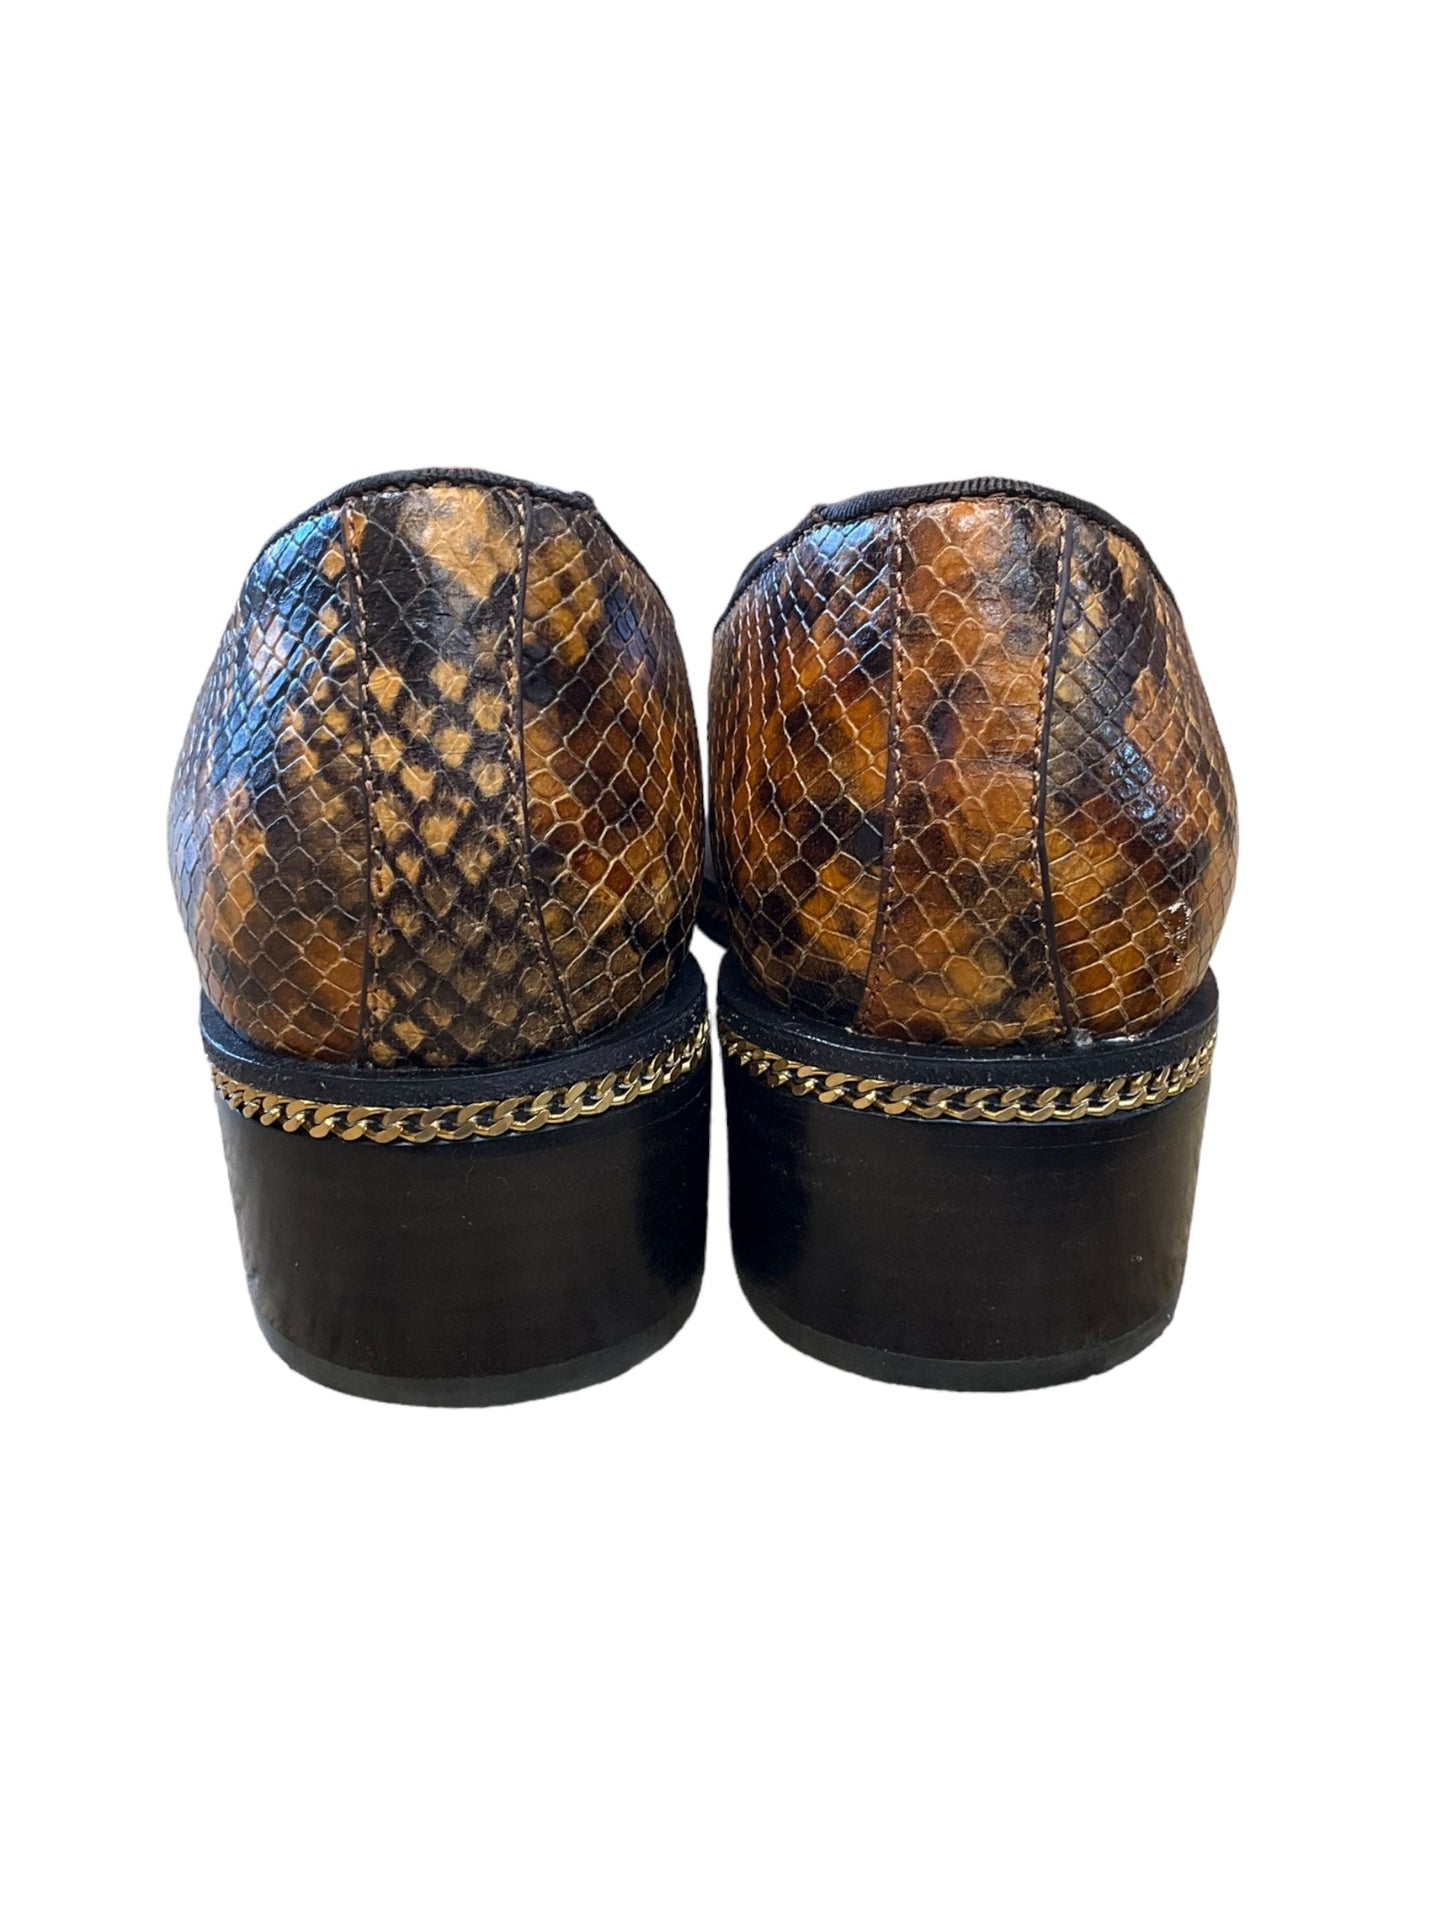 Snakeskin Print Shoes Designer Tory Burch, Size 7.5